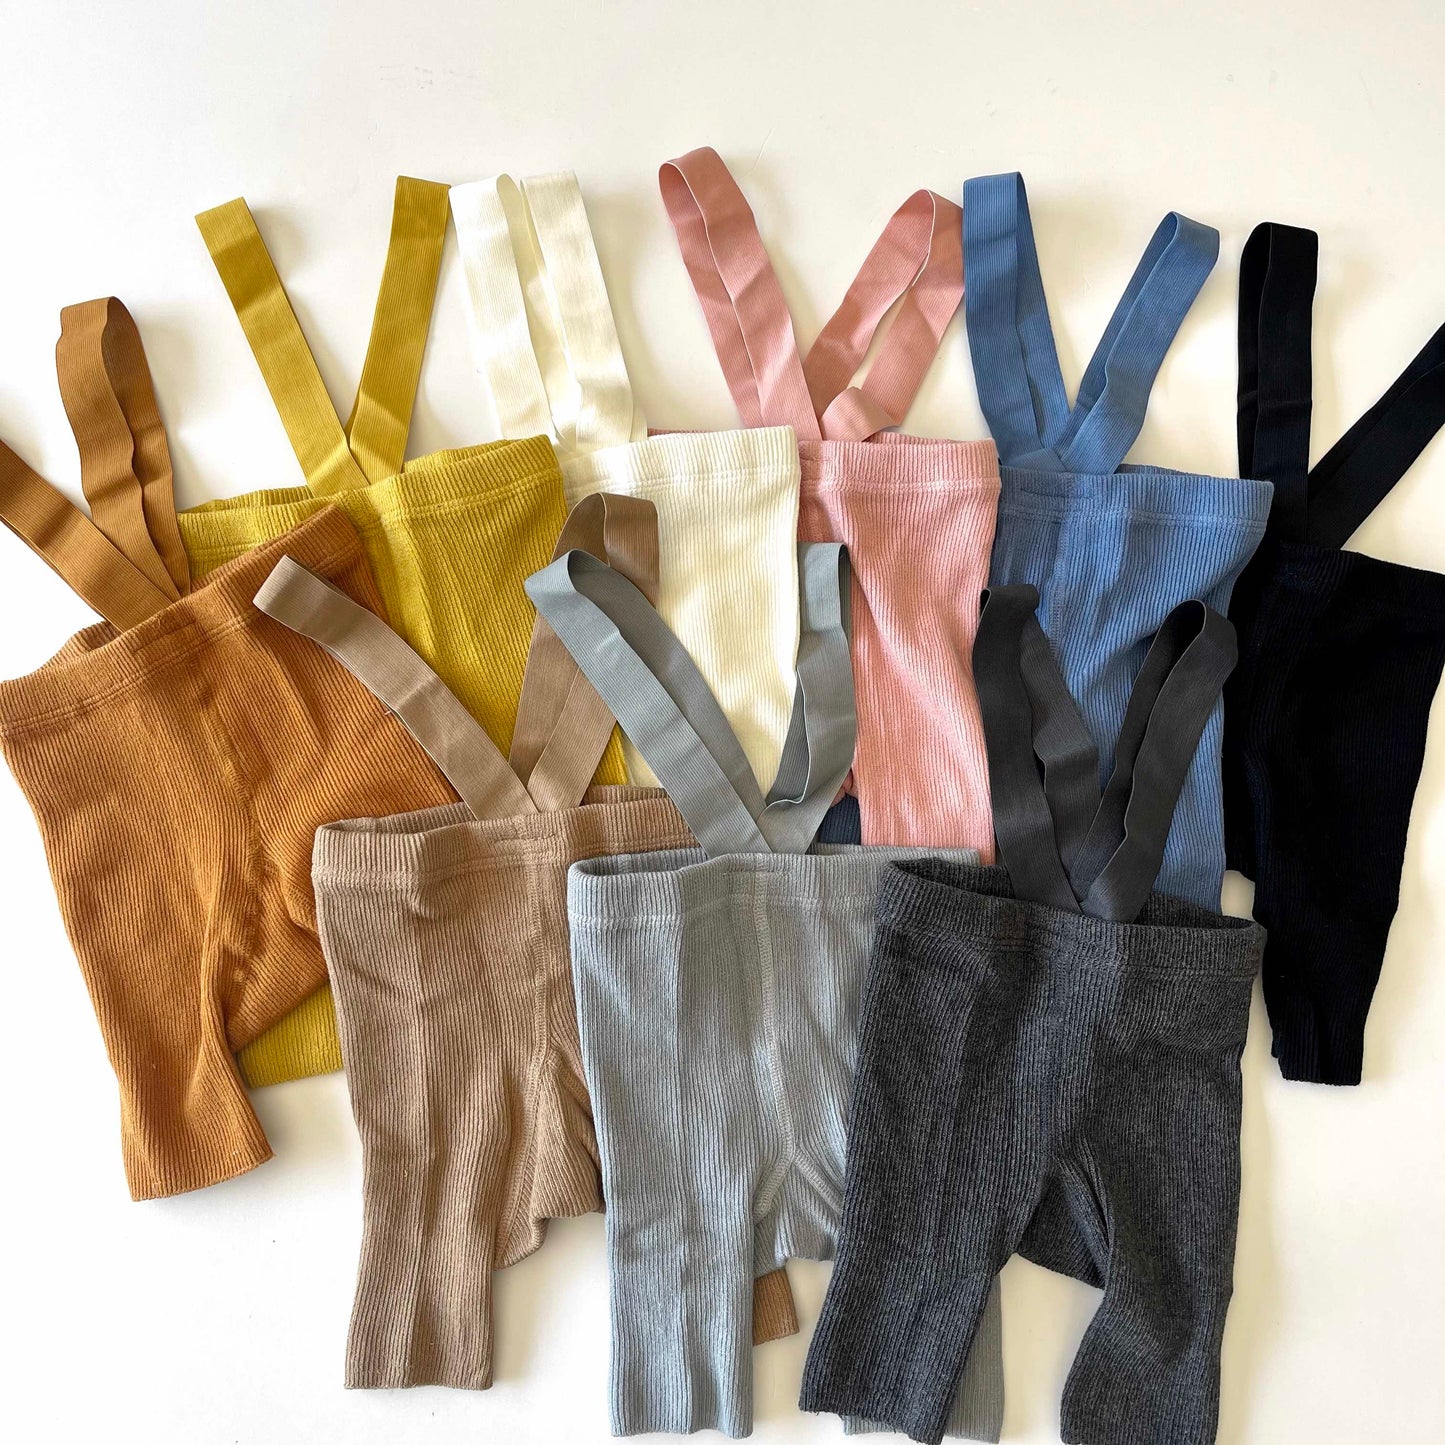 Unisex Ribbed Suspender Shorts - Ginger